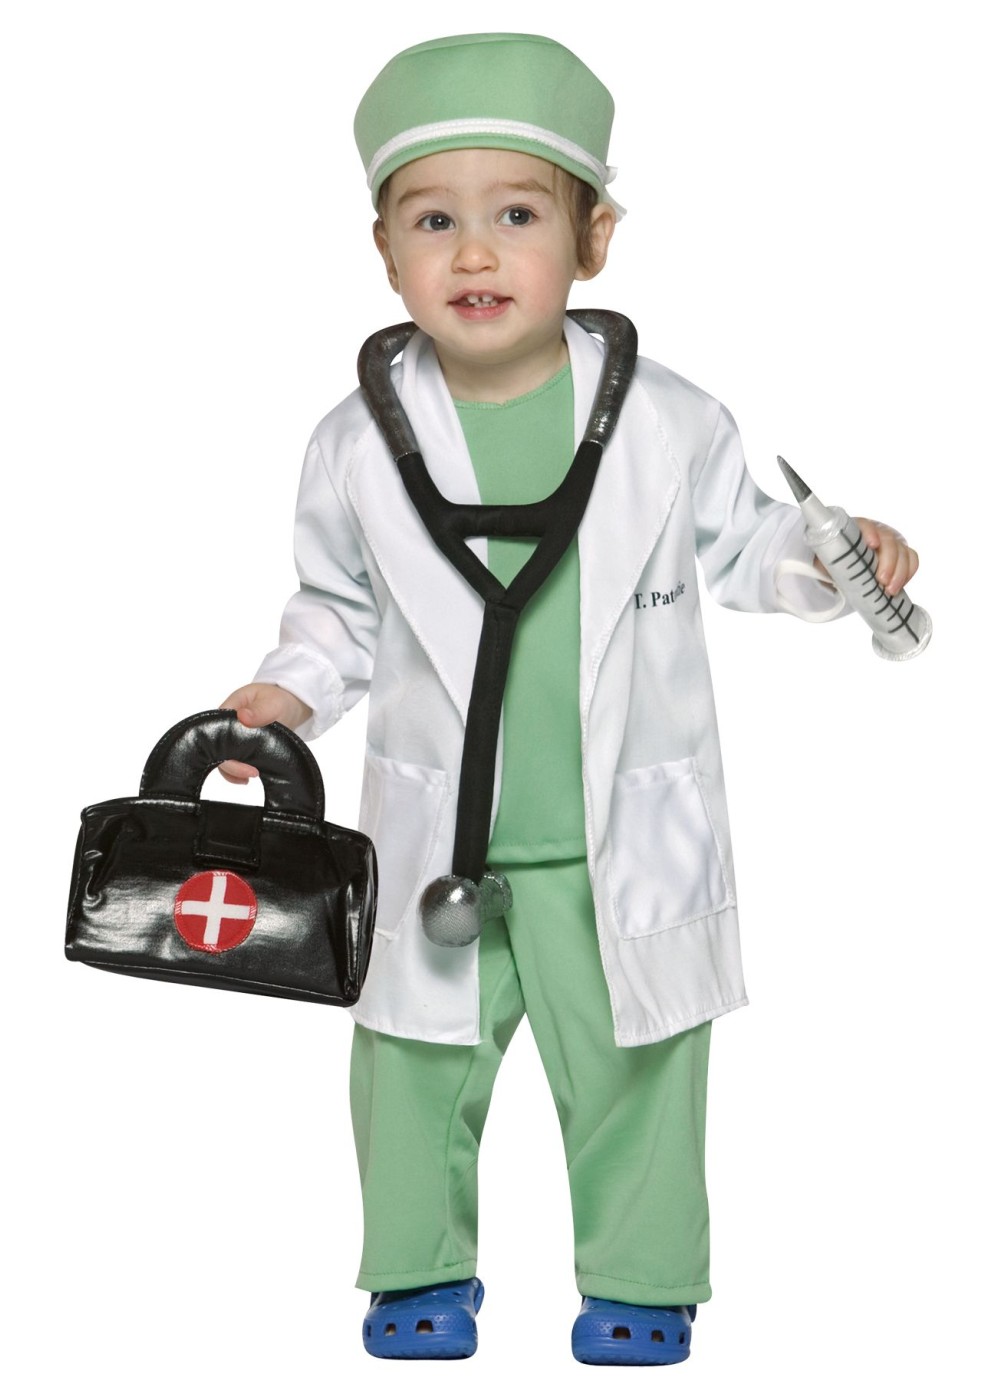 Toddler Boys Doctor Costume